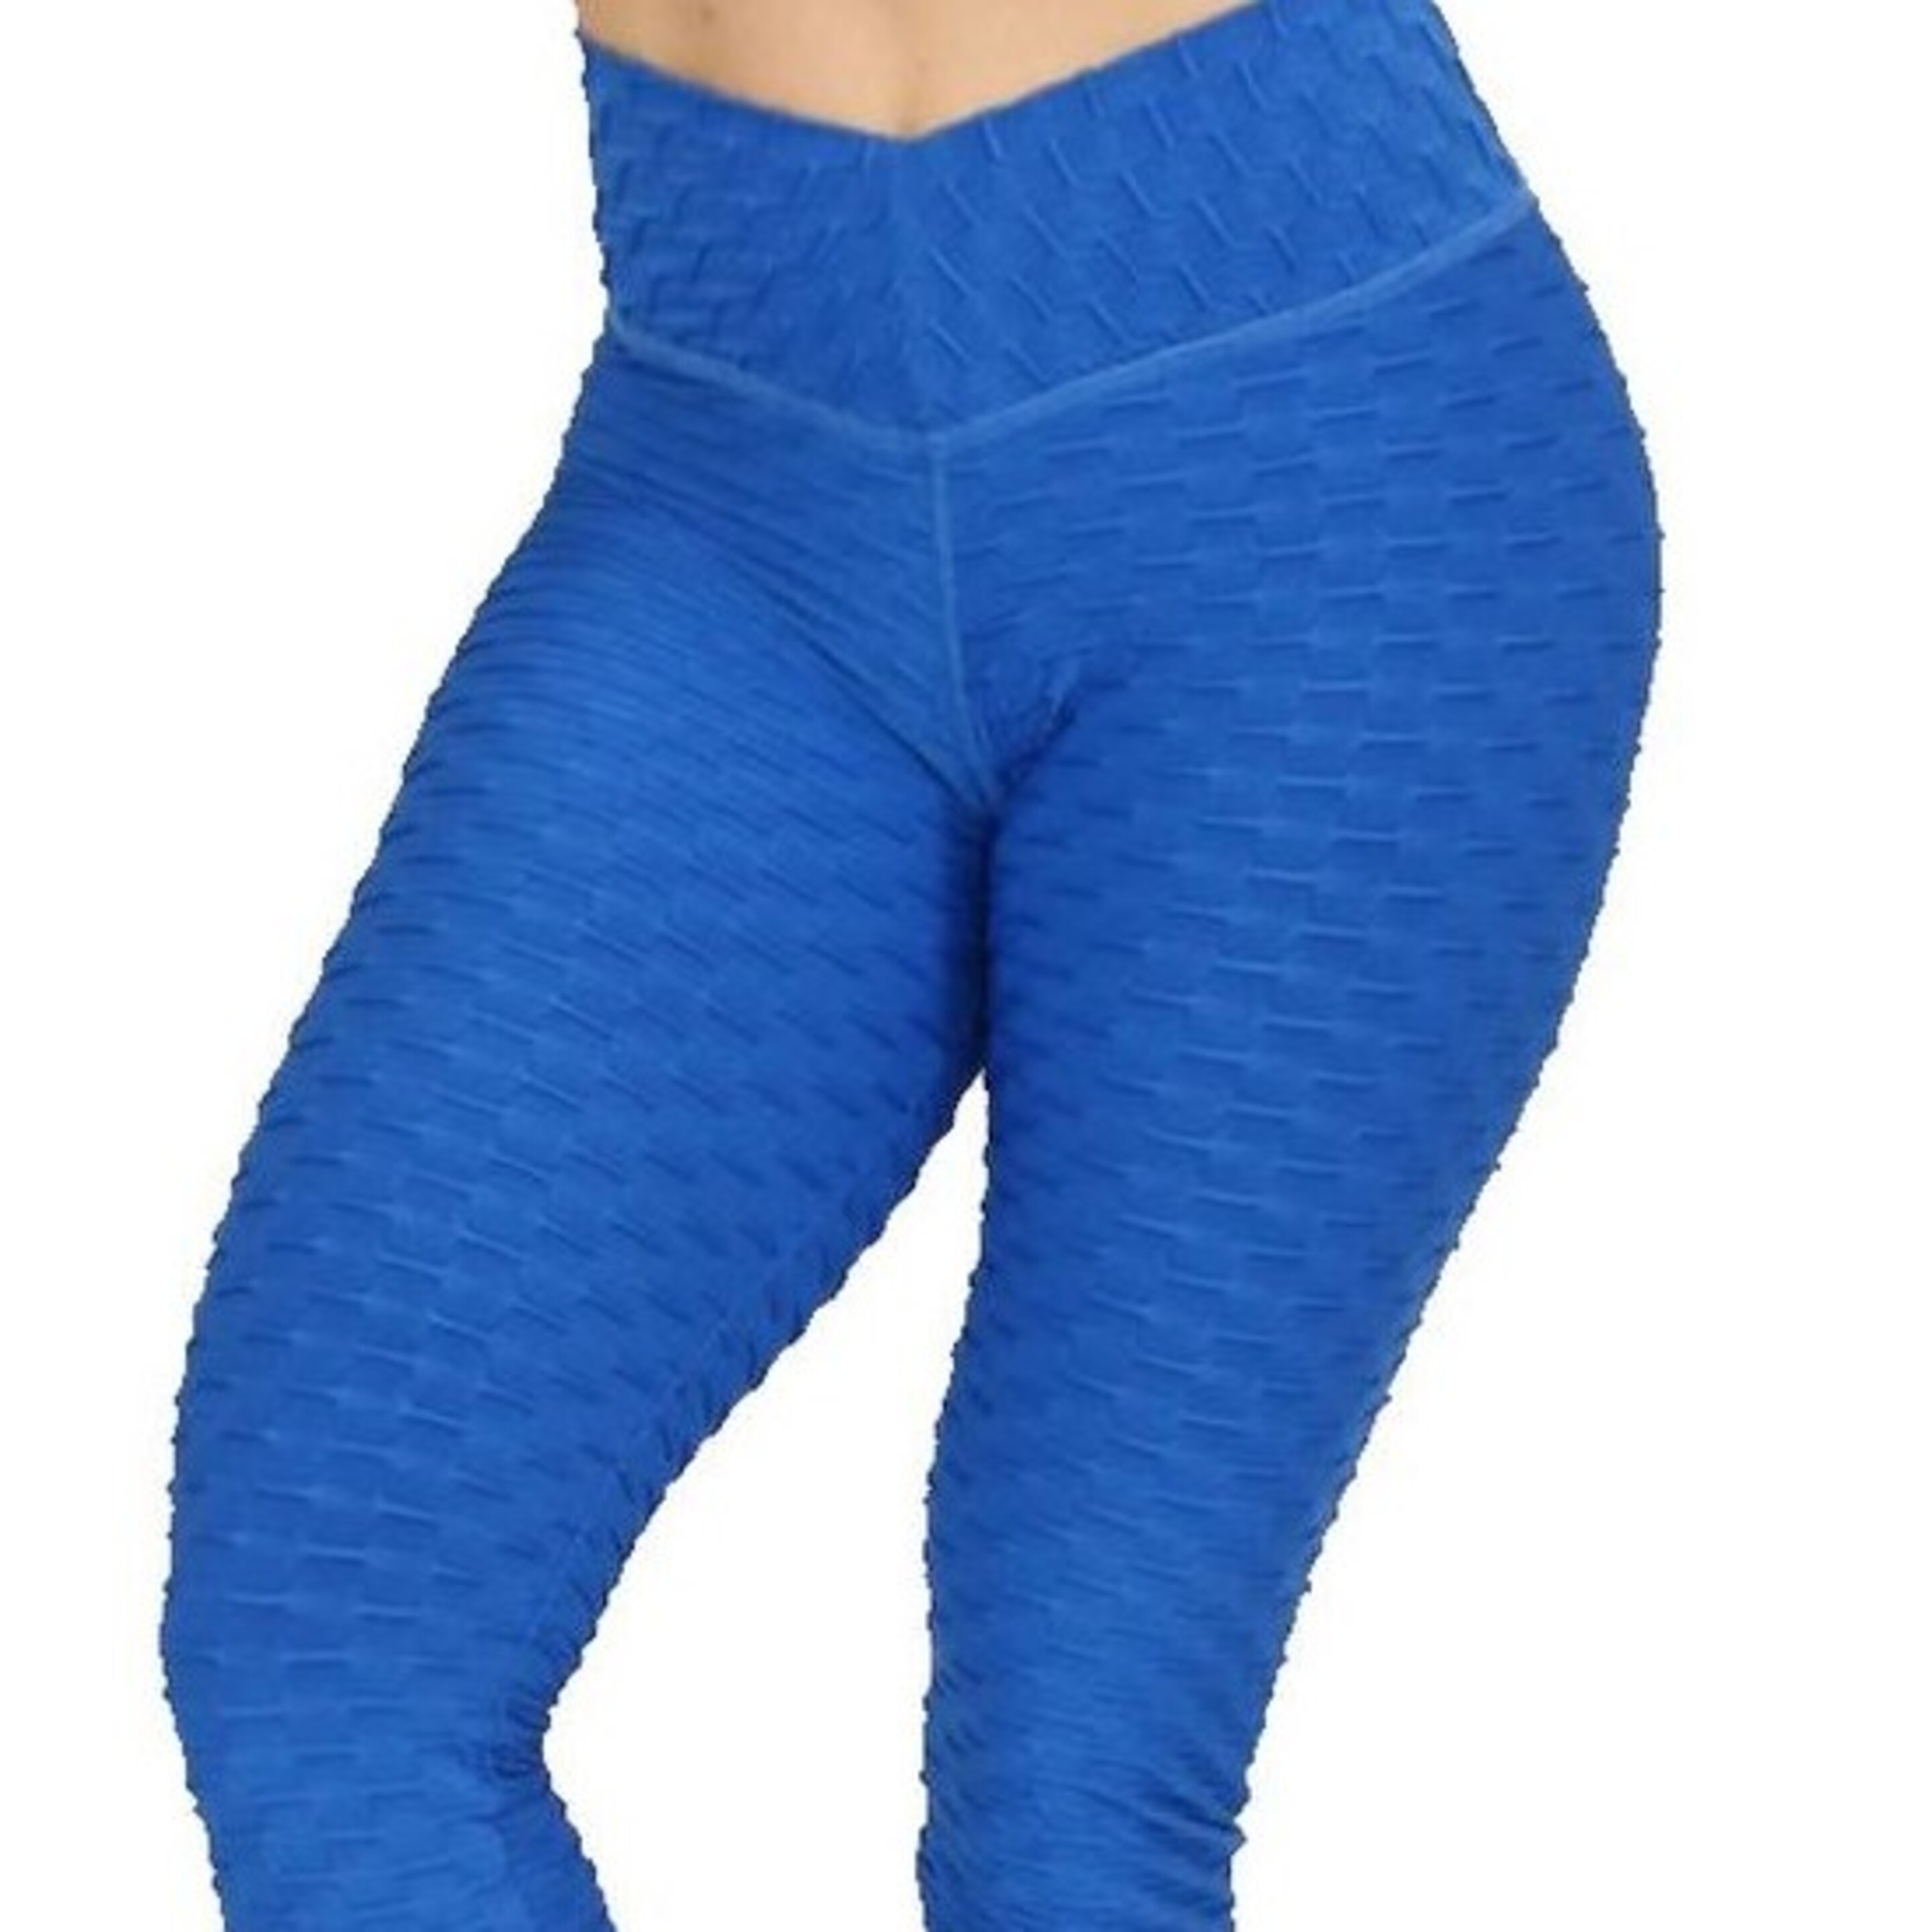 Pantalón Deportivo Mujer Brocado Azul Mate